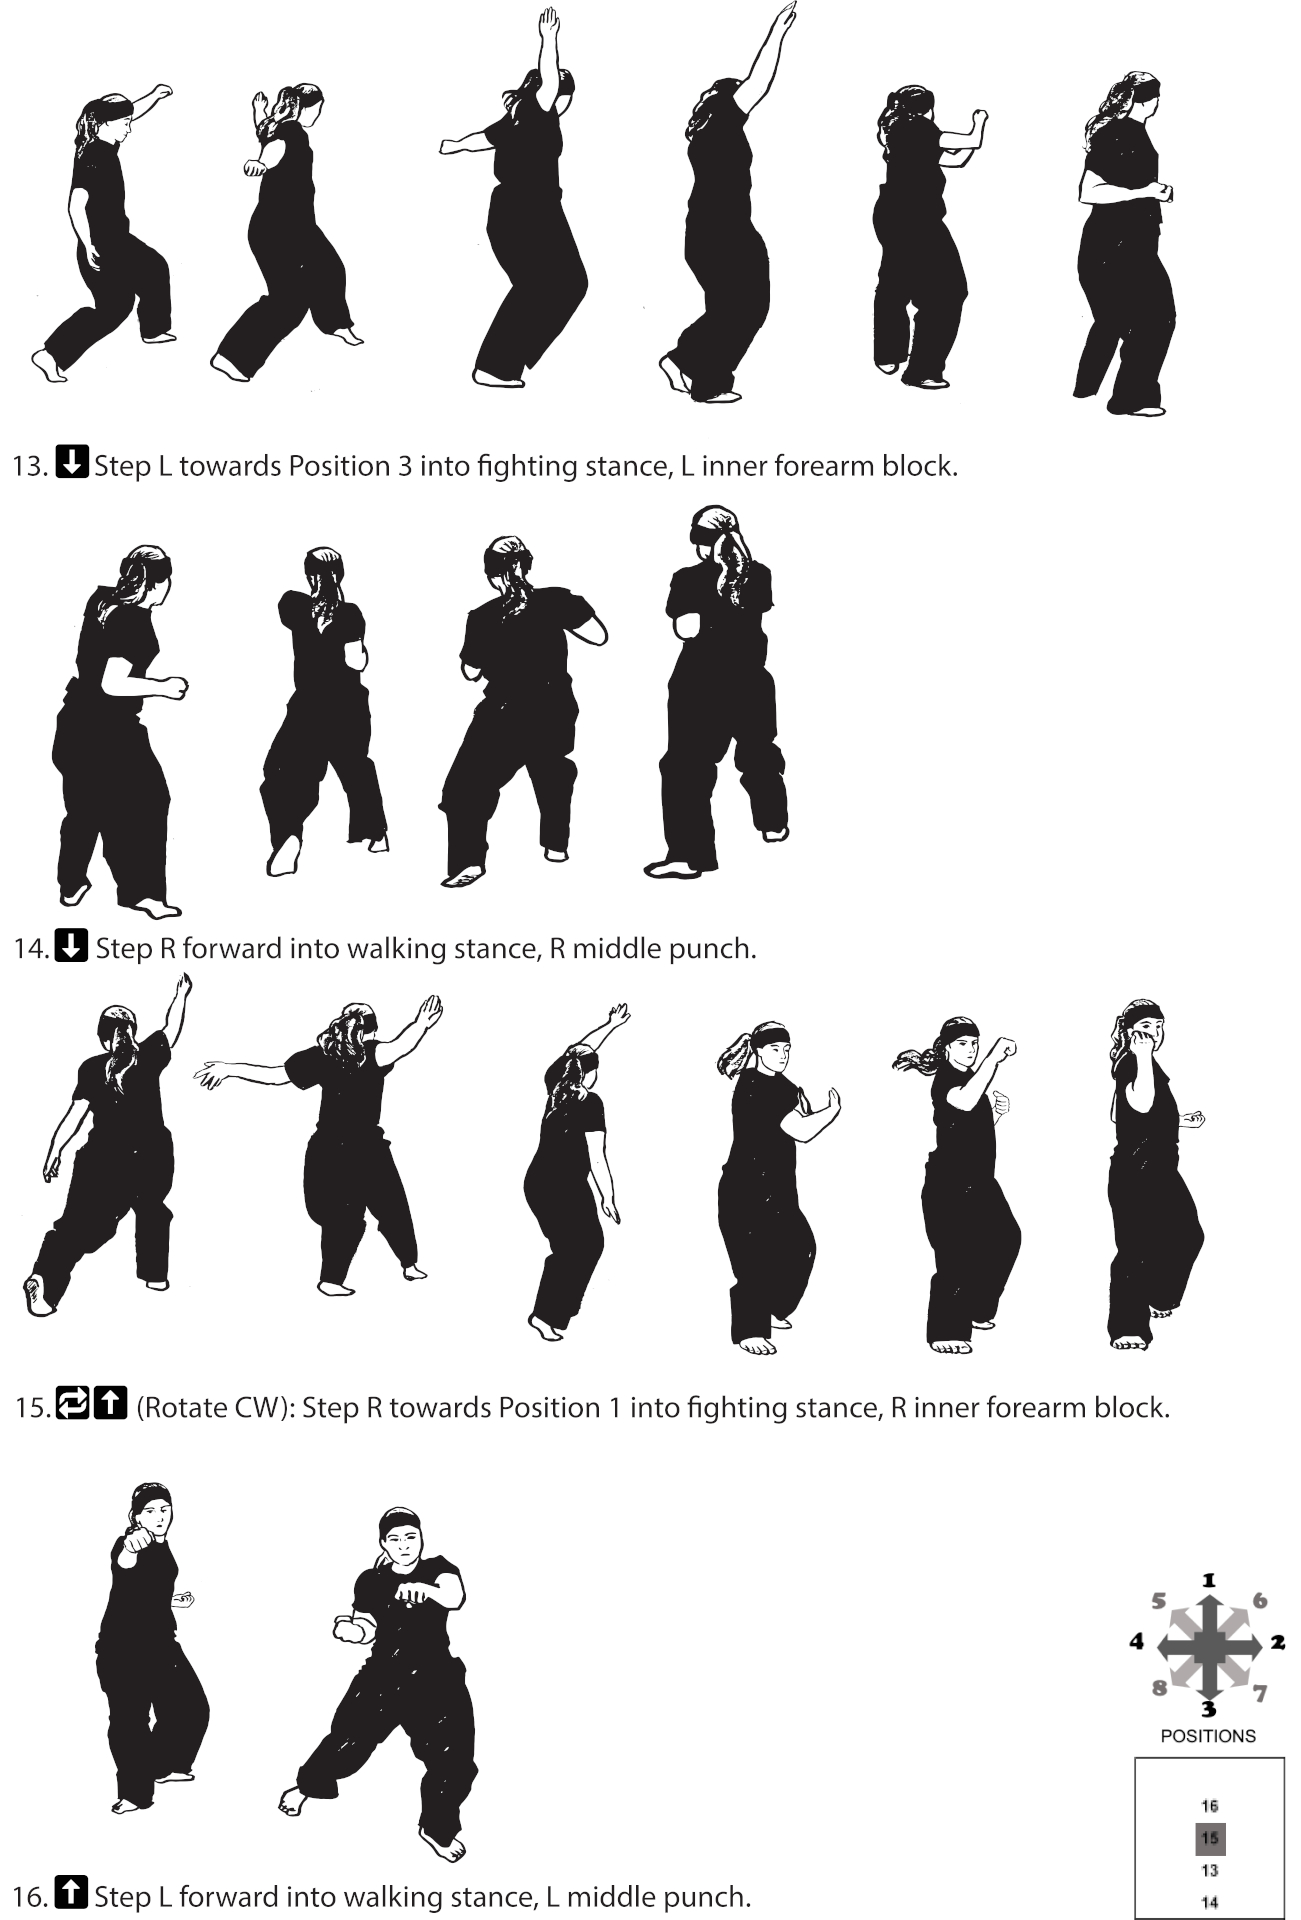 Taekwondo chon-ji hyun. Illustrations made for a women’s taekwondo group illustrating chon-ji hyun step by step.